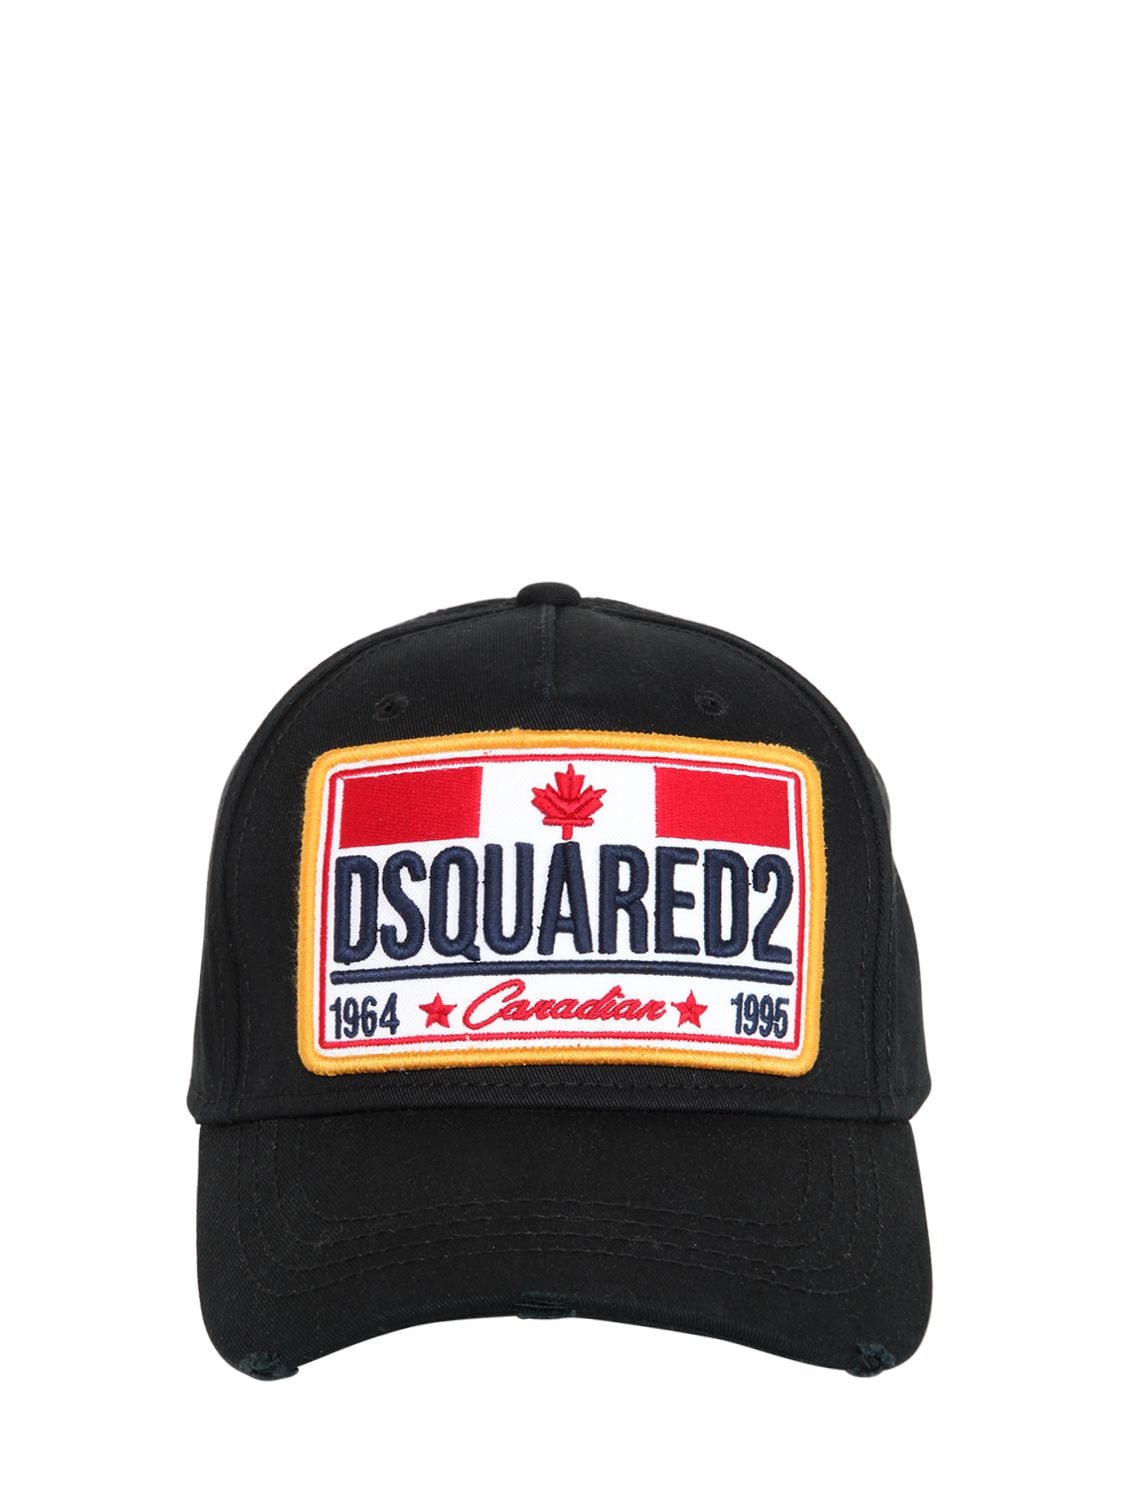 dsquared hat canada flag